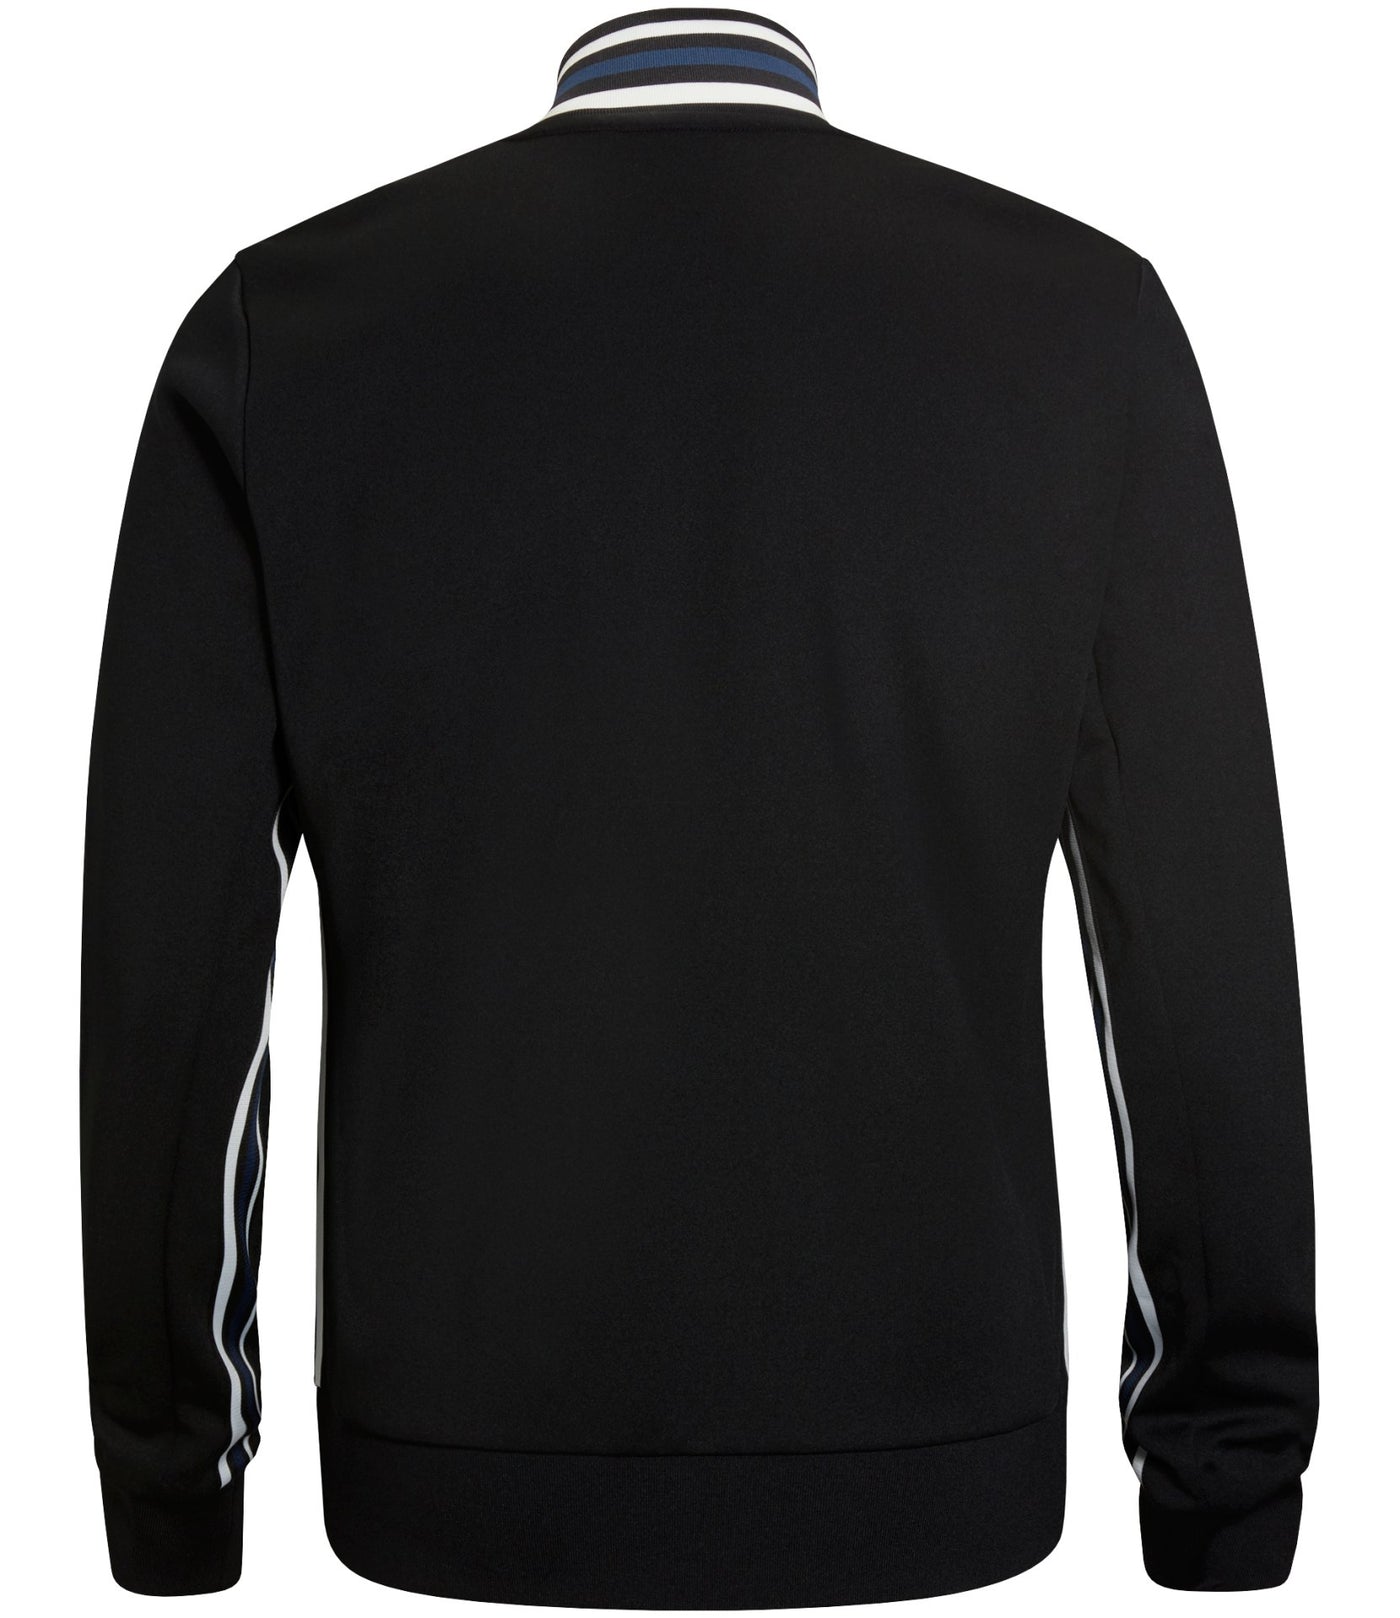 BJORN BORG Signature Retro 72 Half Zip Track Jacket Men's Longsleeve Top Black - Activemen Clothing